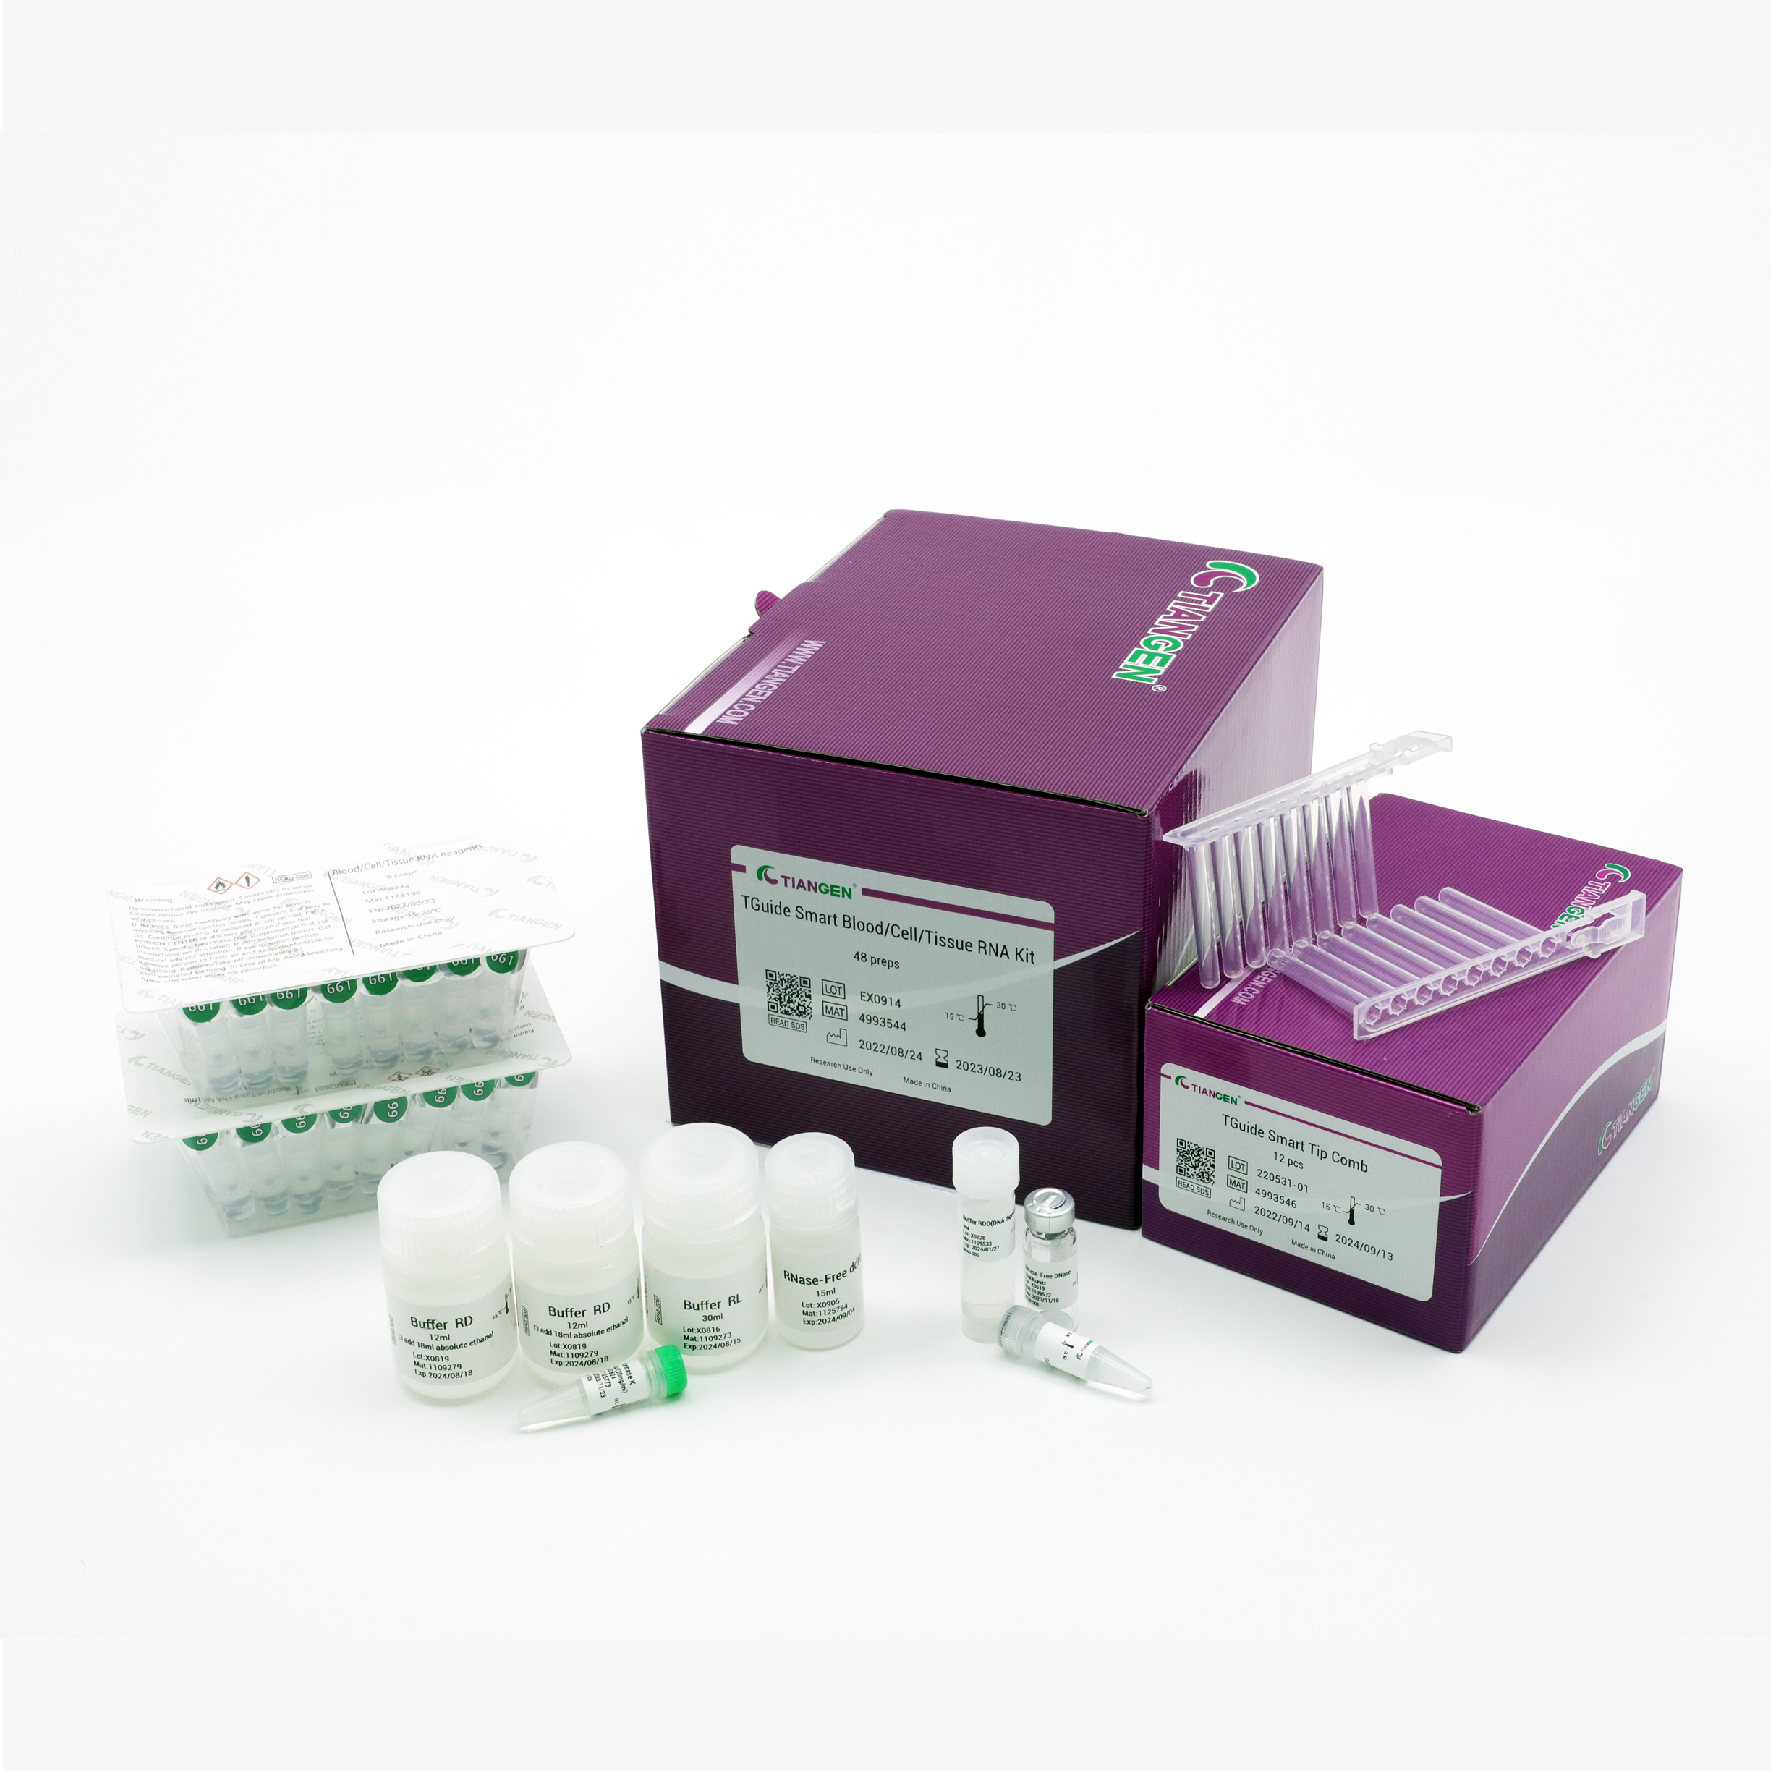 TGuide Smart Blood/Cell/Tissue RNA Kit